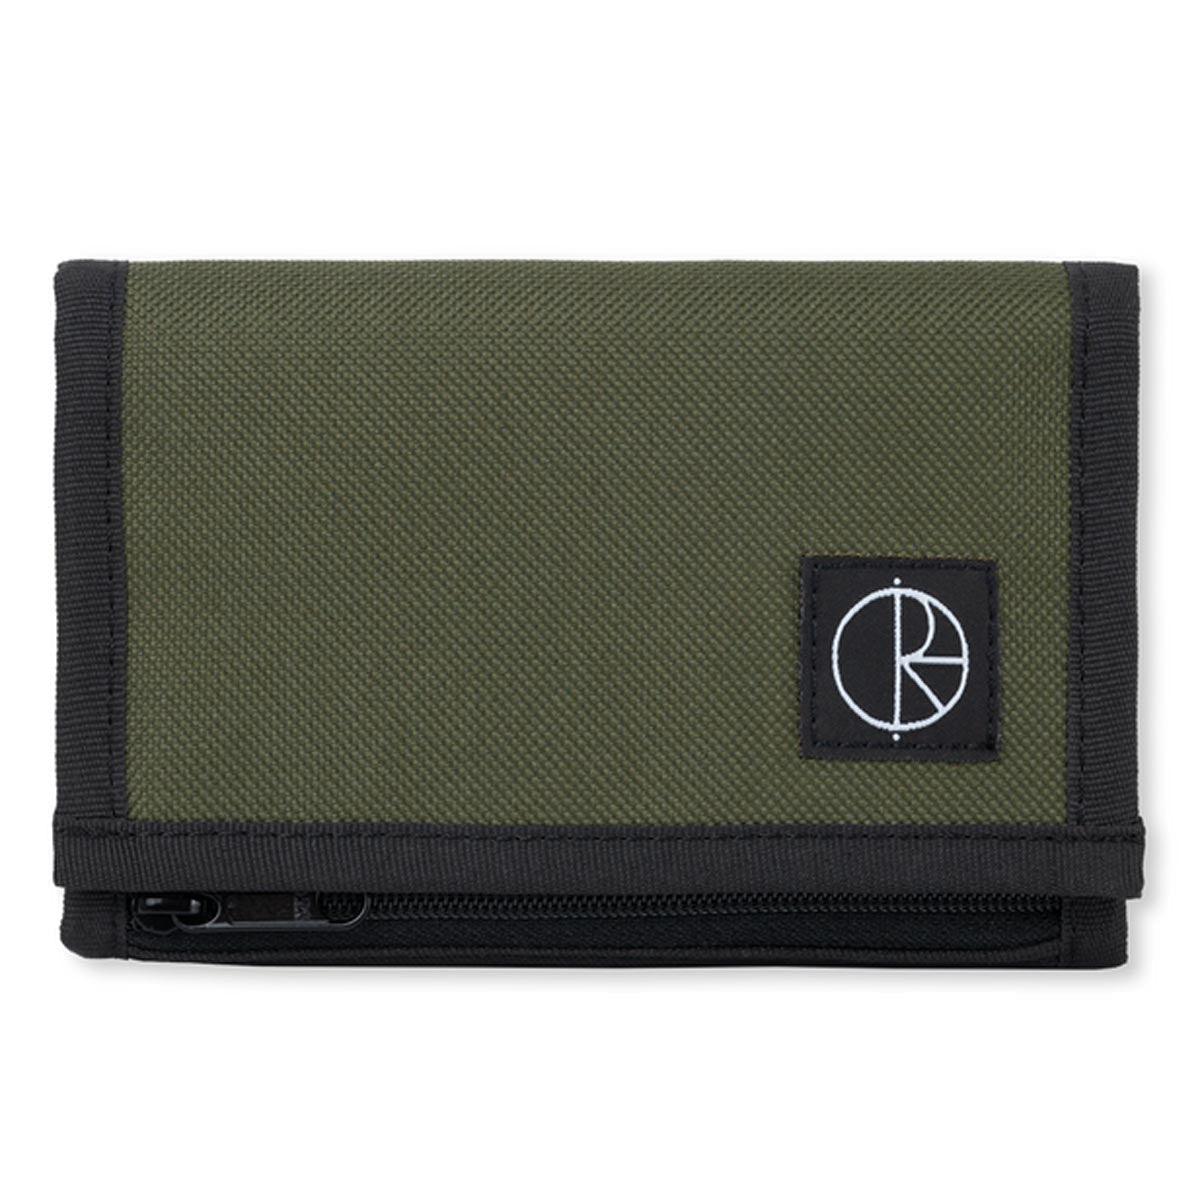 Polar Key Stroke Logo Wallet - Army Green image 1